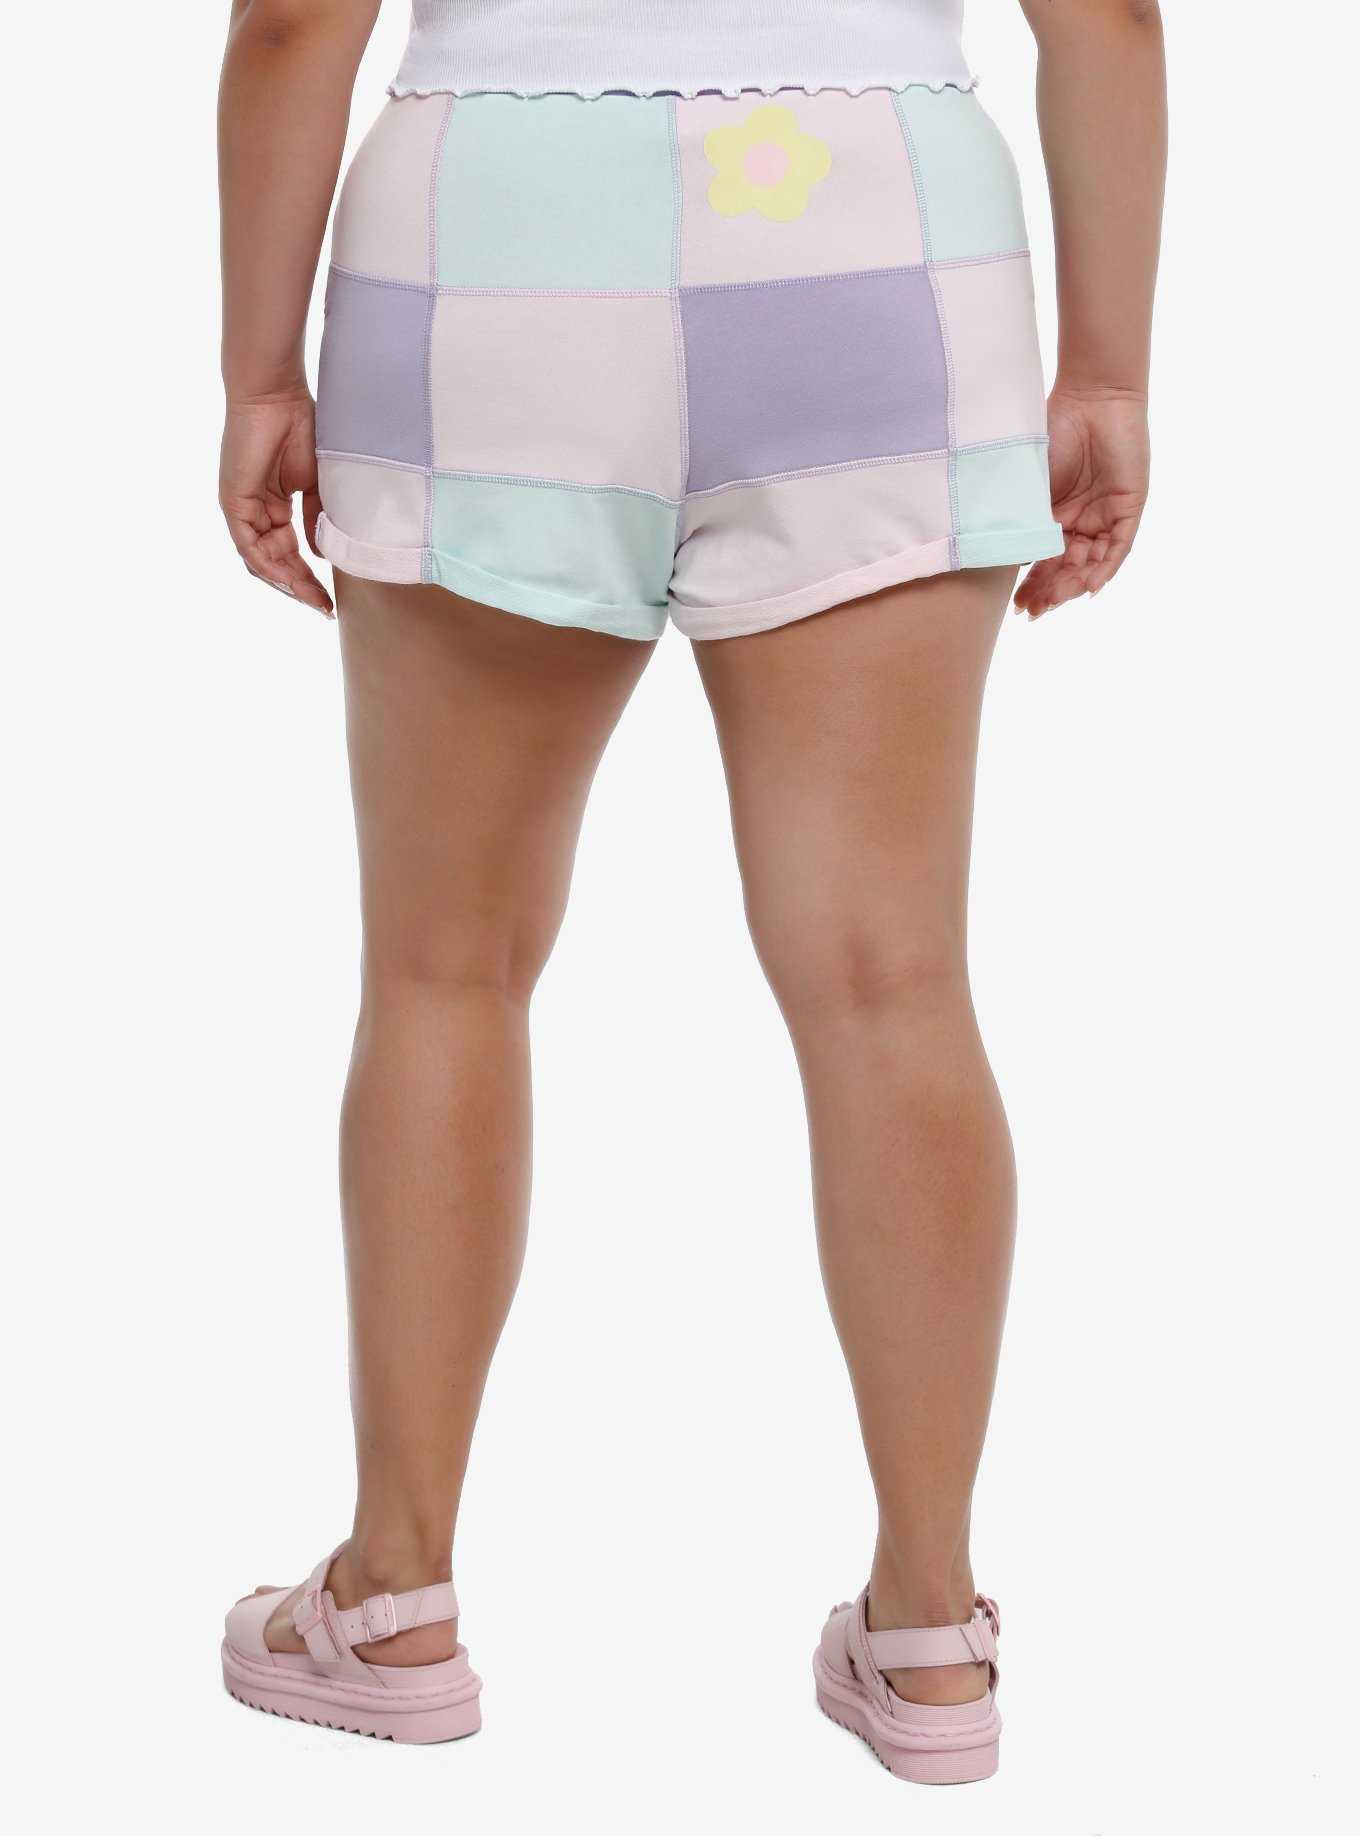 Her Universe Disney Pastel Spring Patchwork Lounge Shorts Plus Size, , hi-res